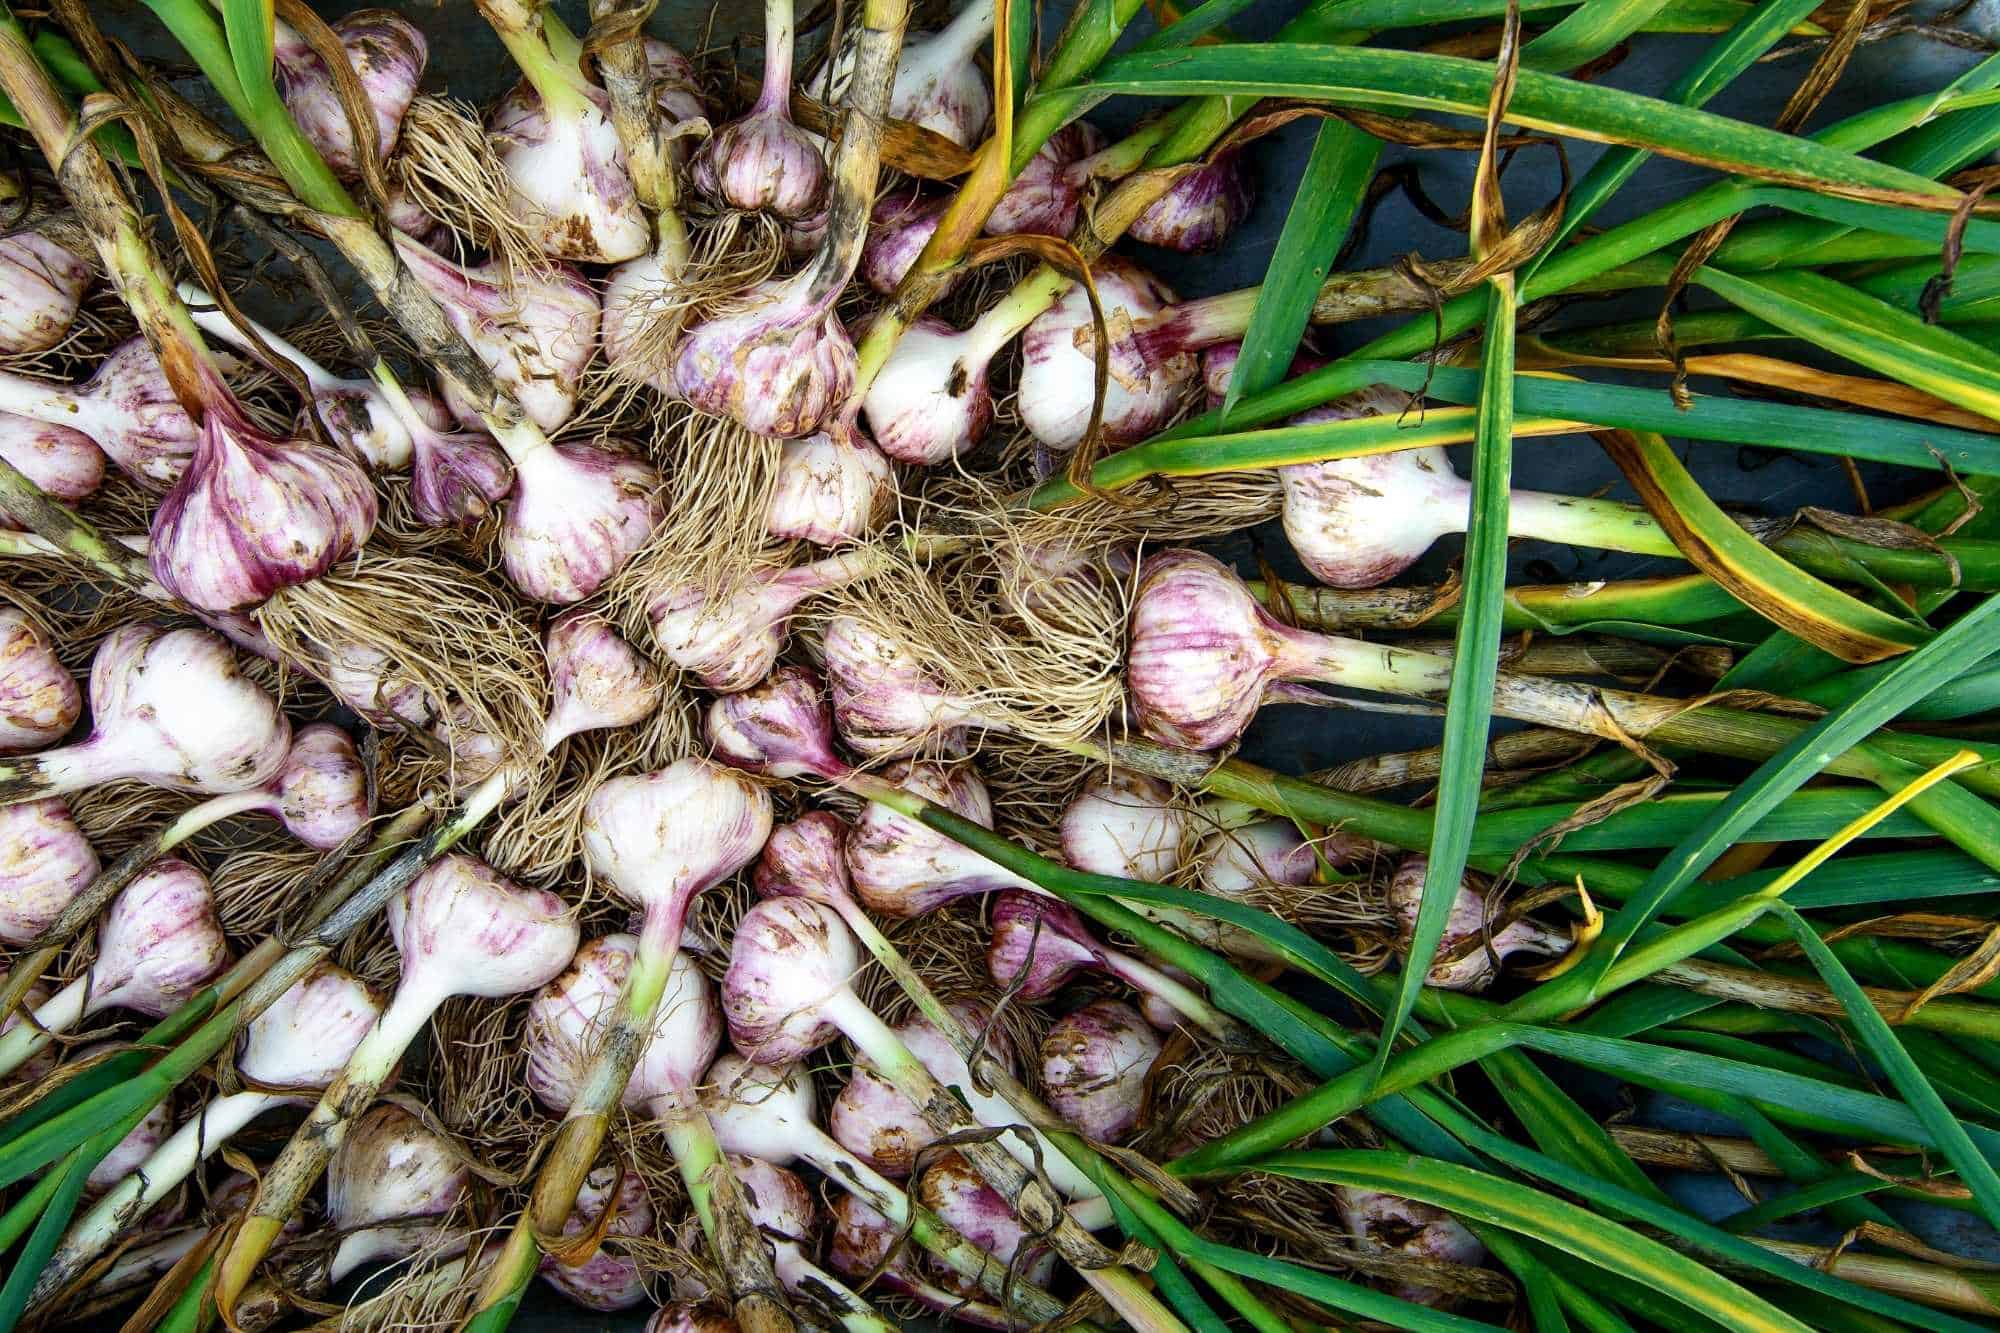 Freshly harvested garlic companion plants.